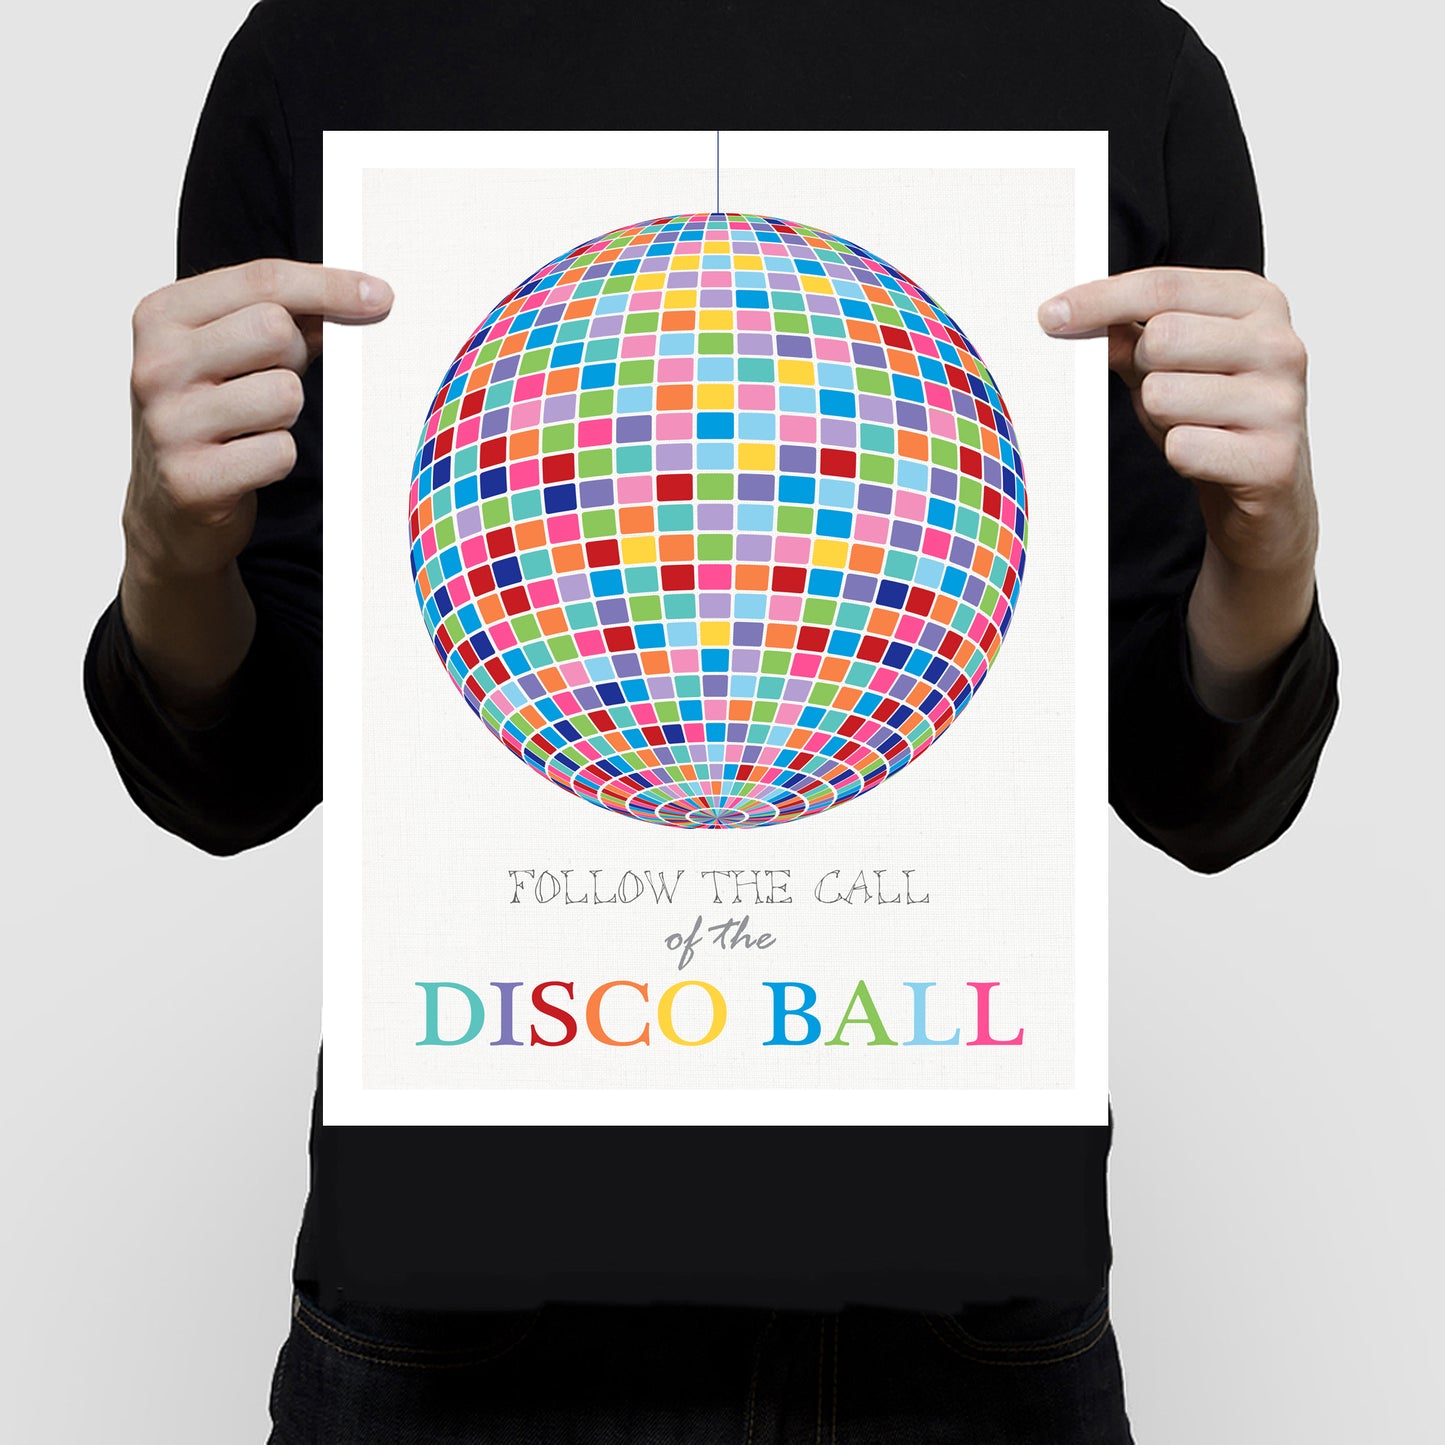 Follow the call of the disco ball print